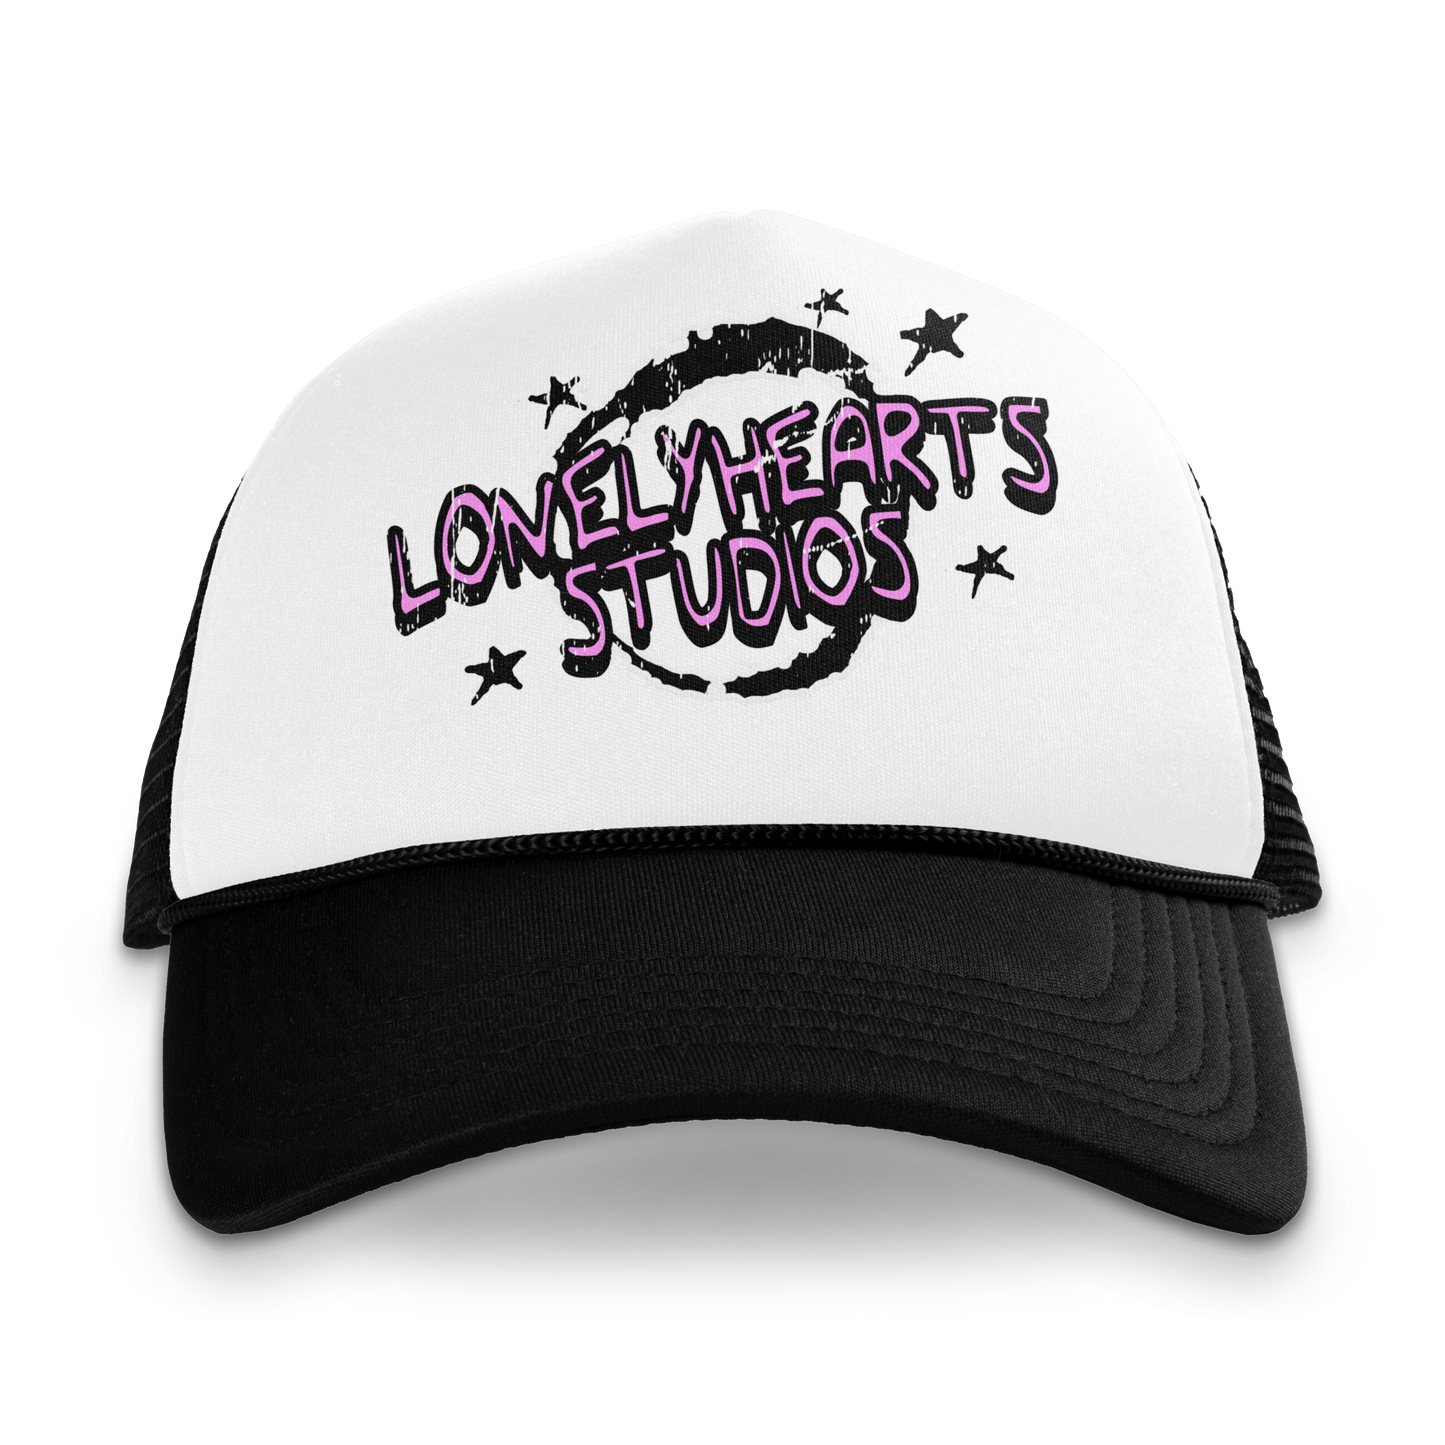 Lonely Hearts Studios Trucker Hat